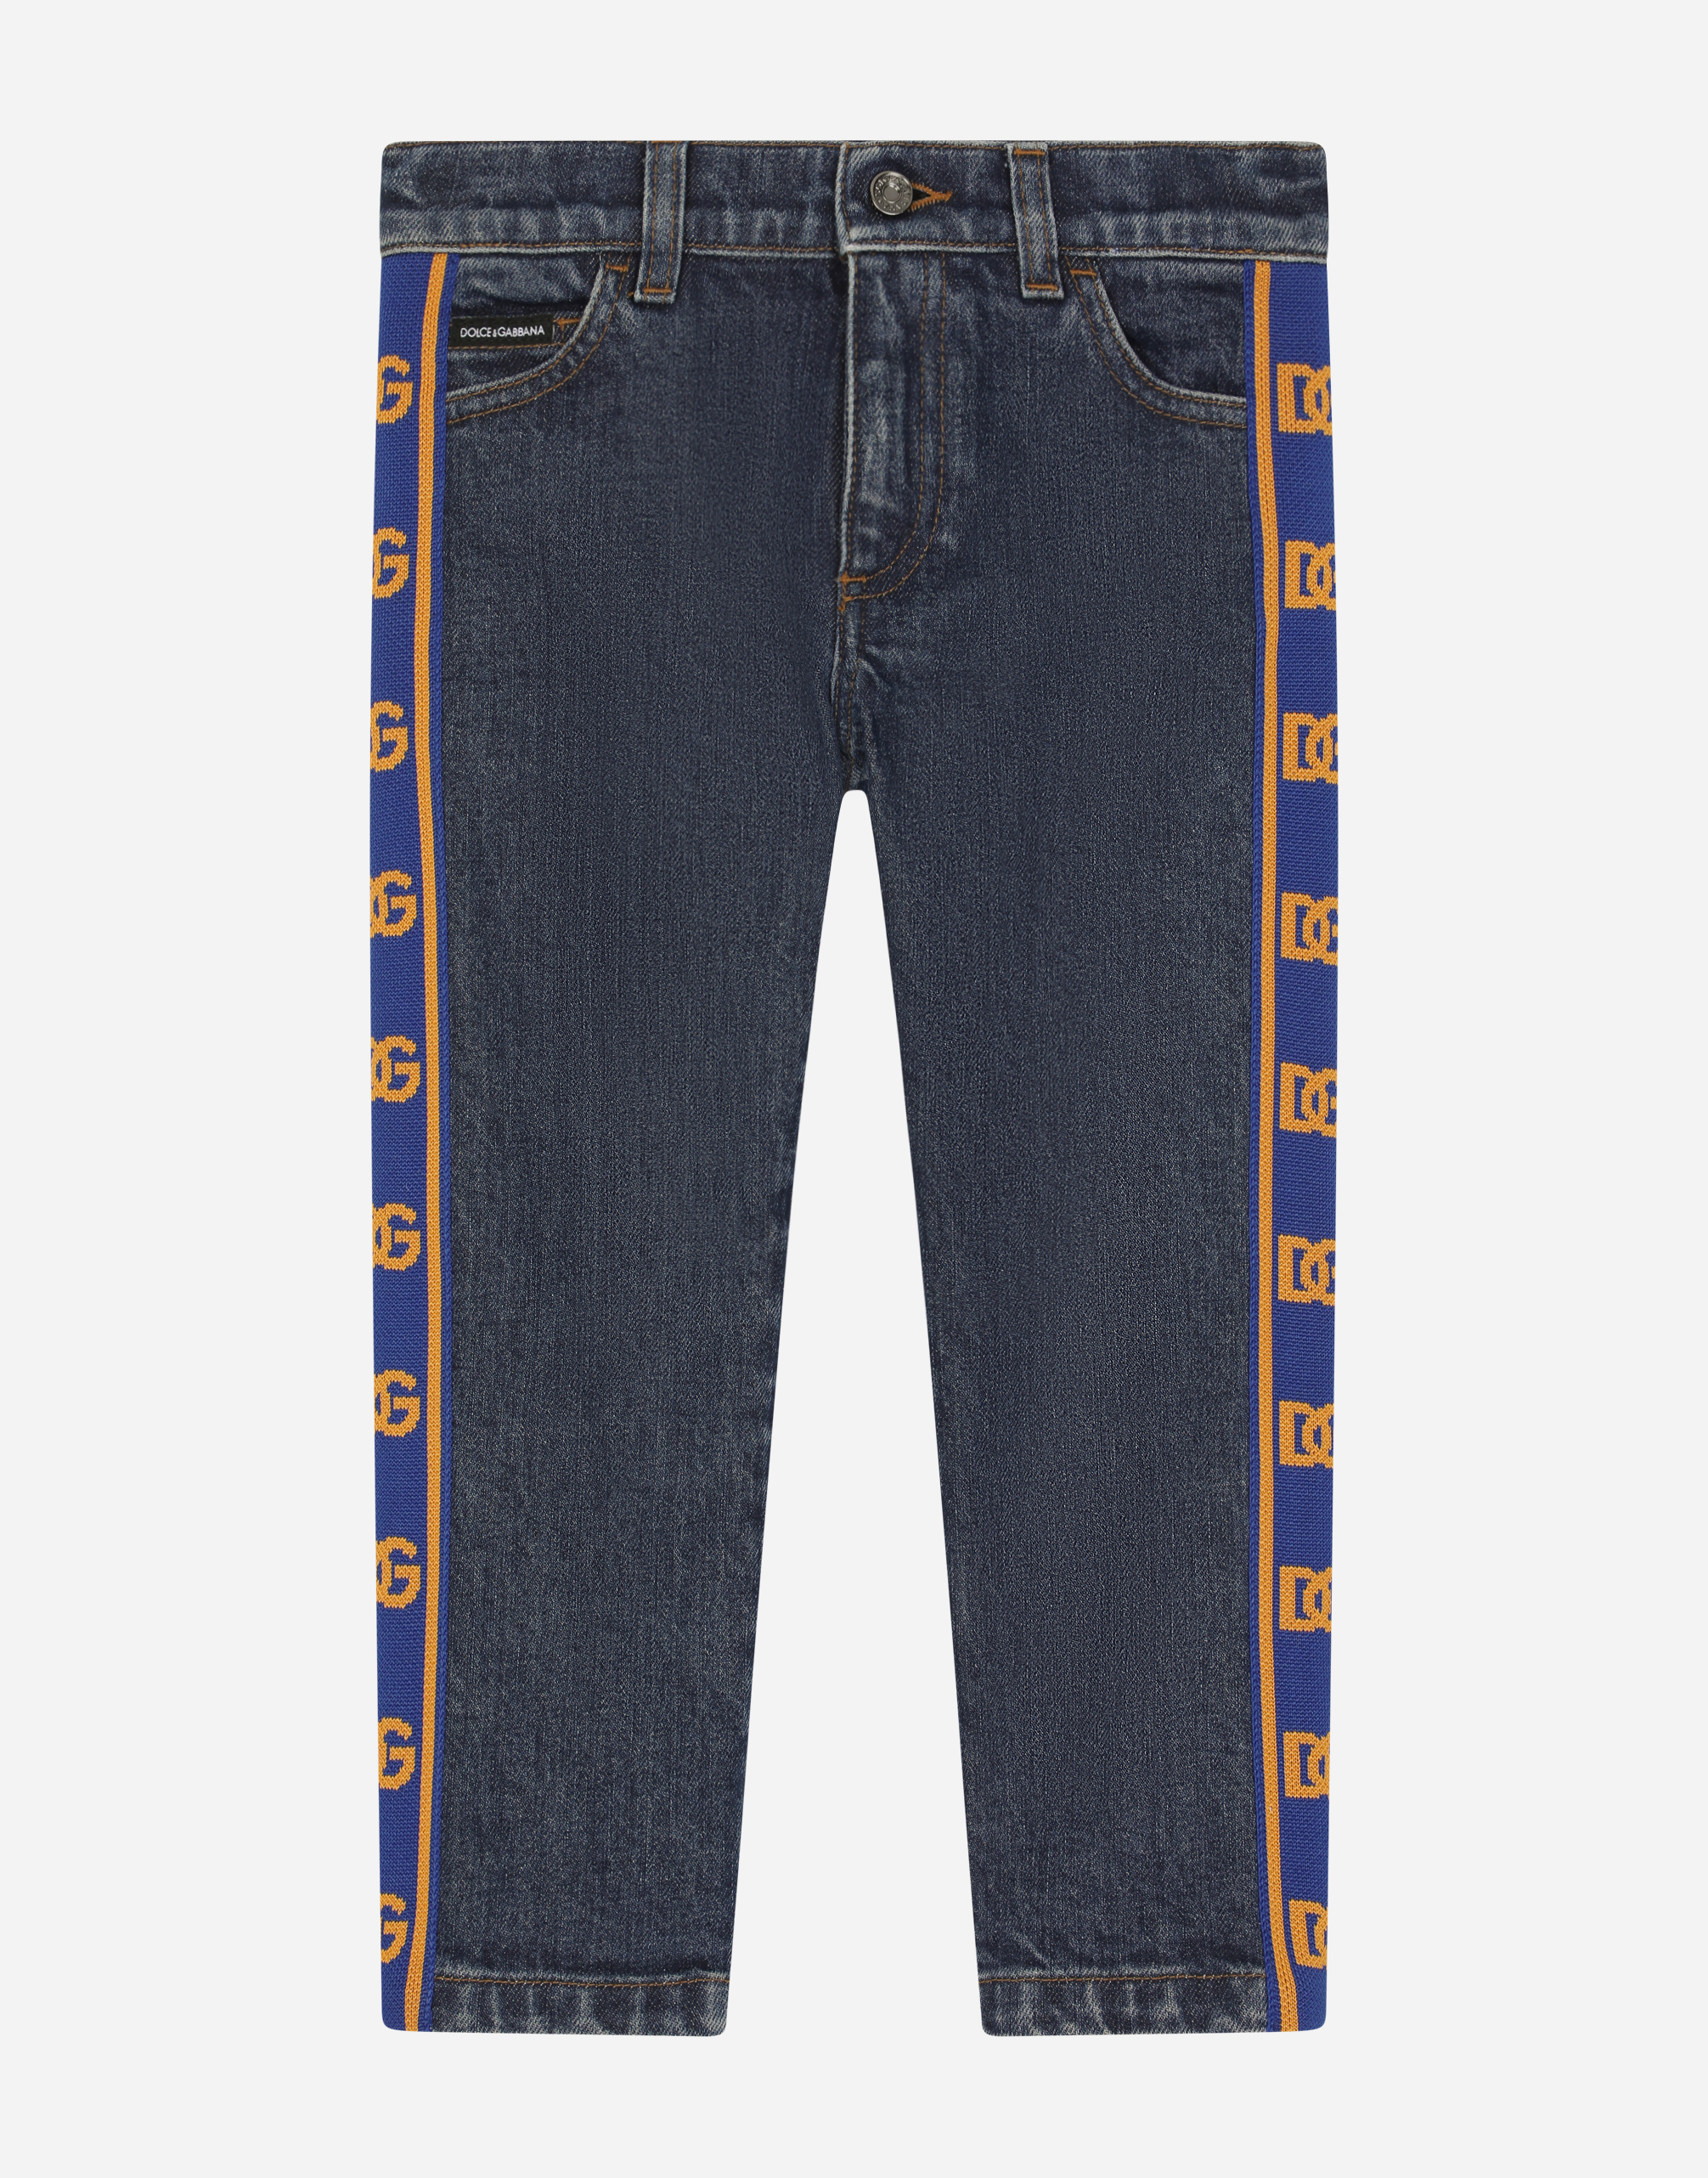 DG Jacquard Straight Jeans in Blue - Dolce Gabbana